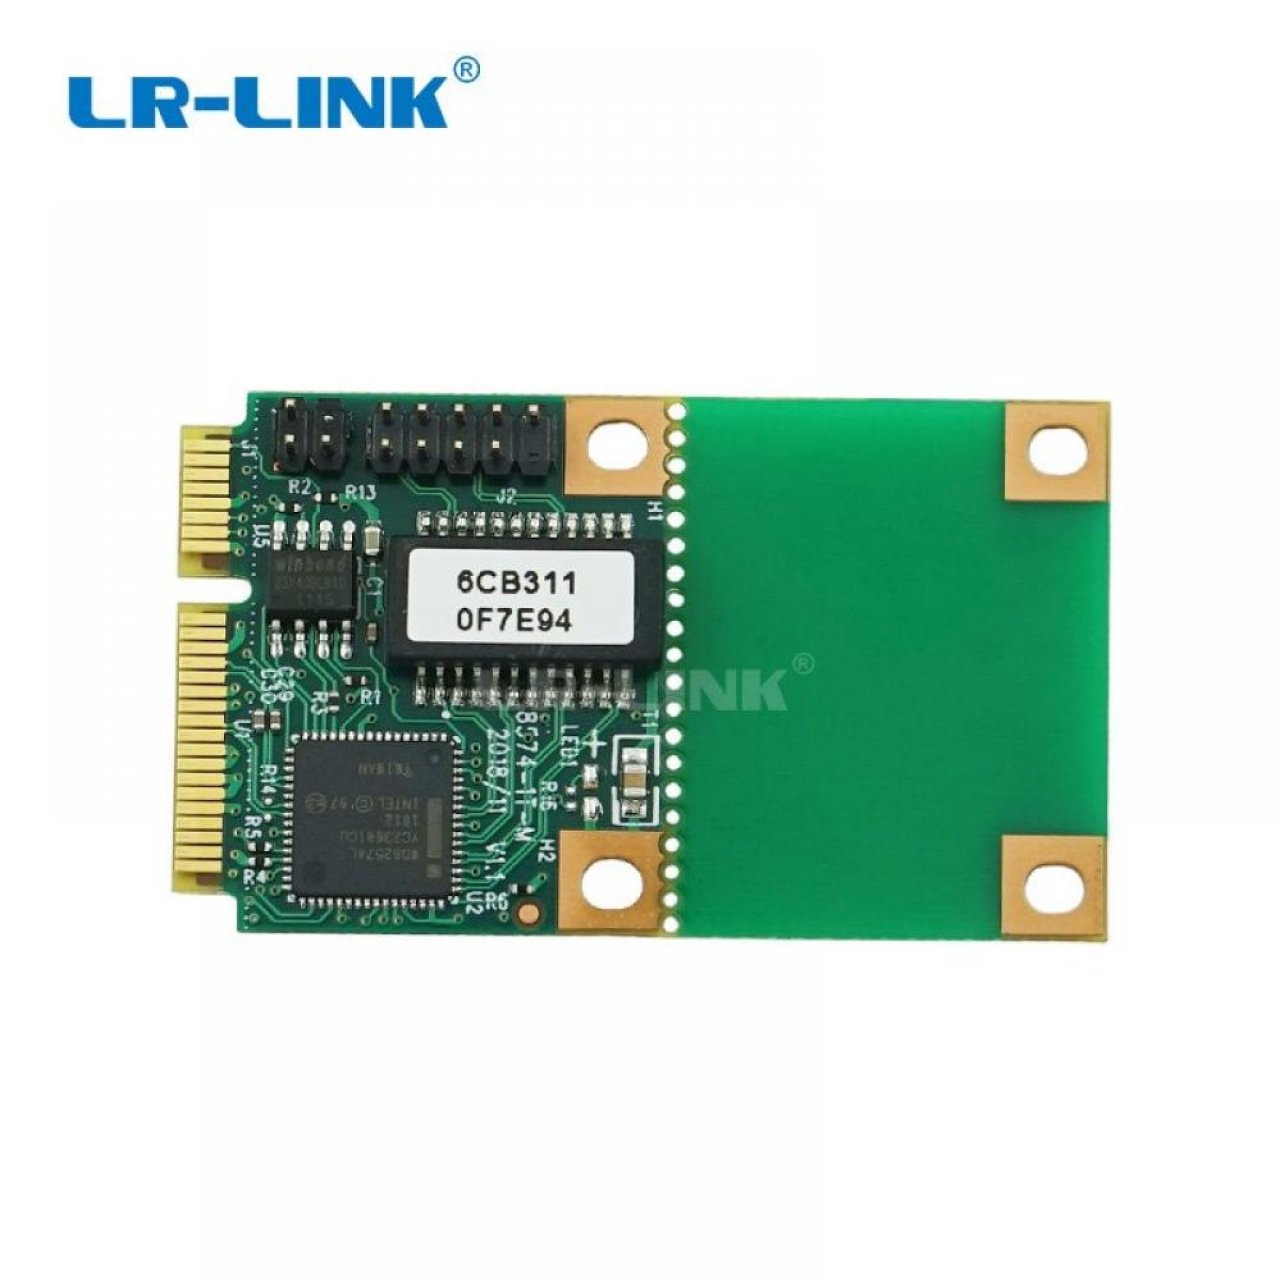 LRES2201PT Mini PCIe Single-port Copper Gigabit Ethernet Network Adapter Intel 82574